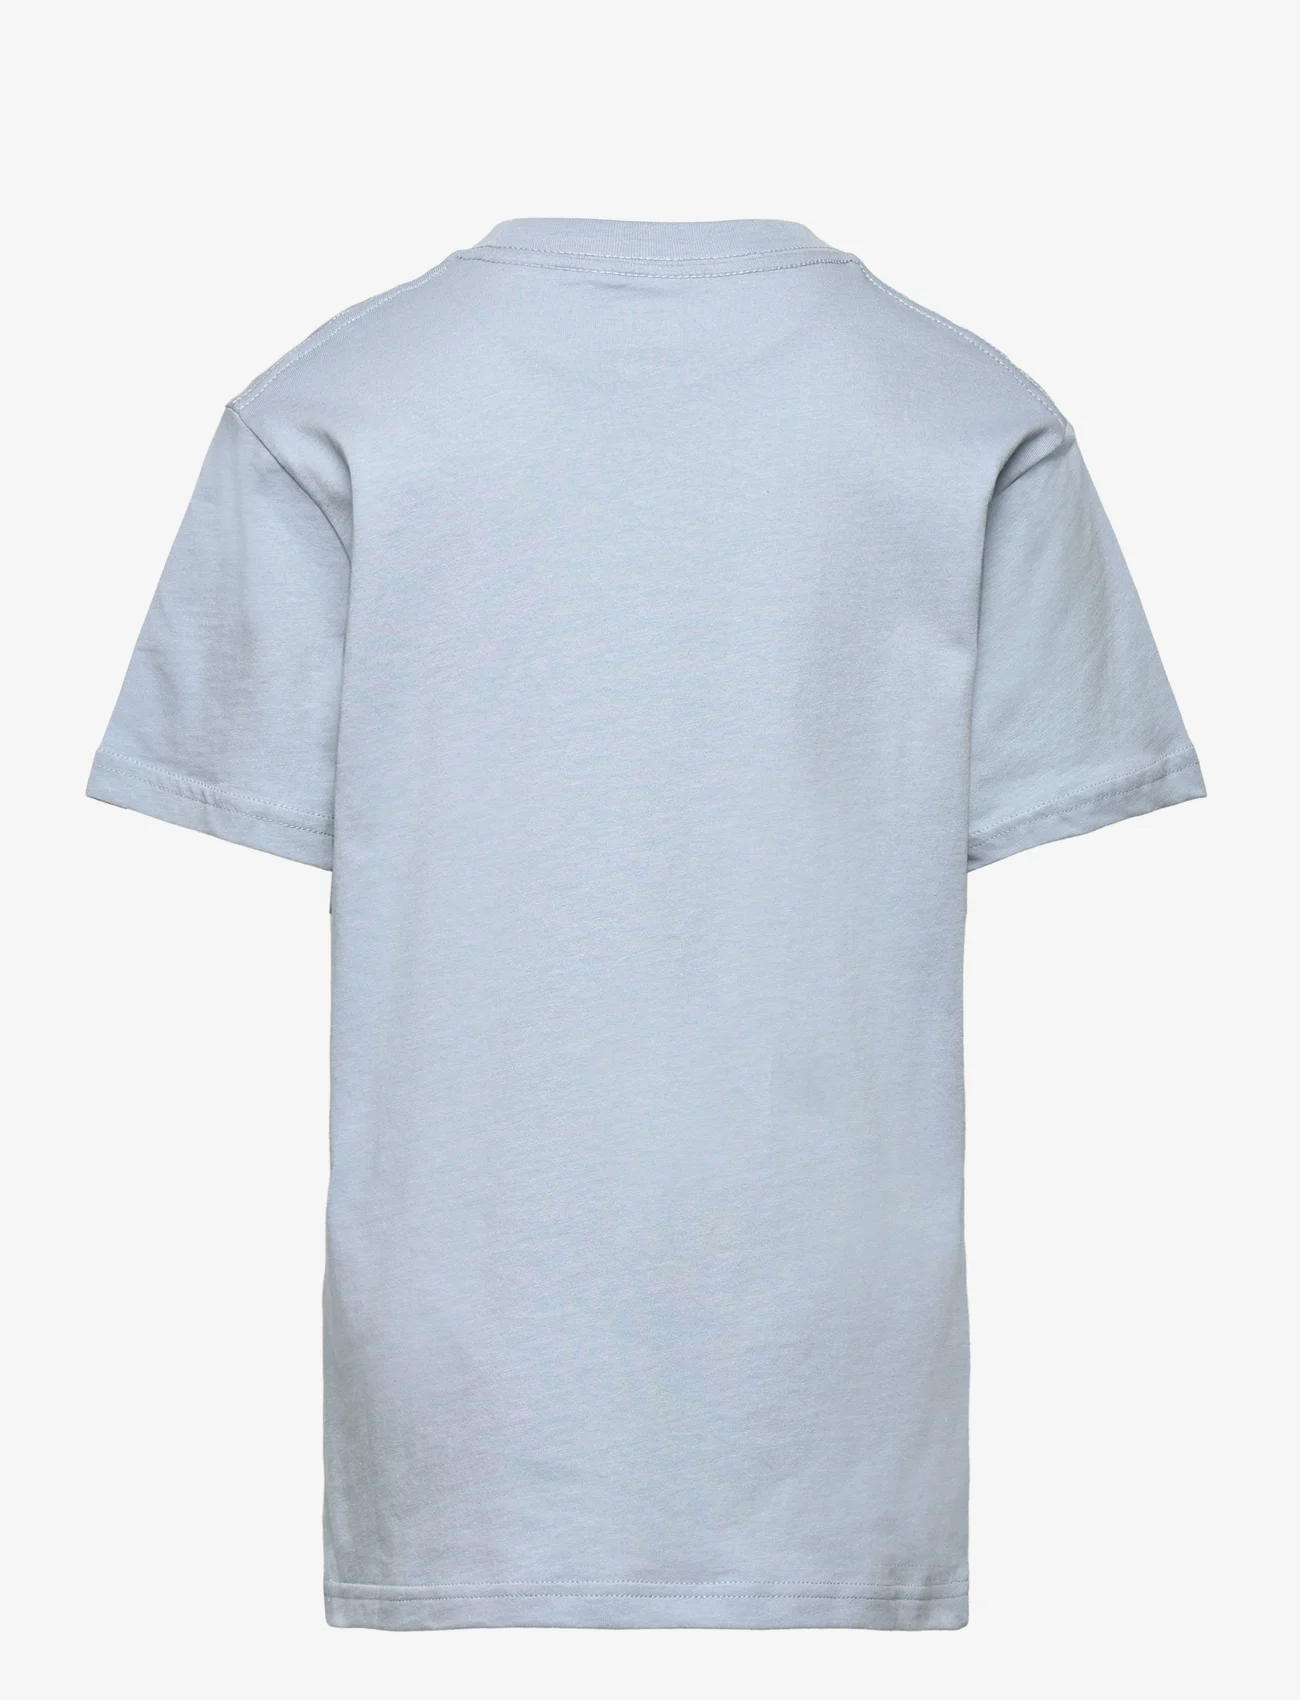 VANS - PRINT BOX 2.0 - kortärmade t-shirts - dusty blue - 1